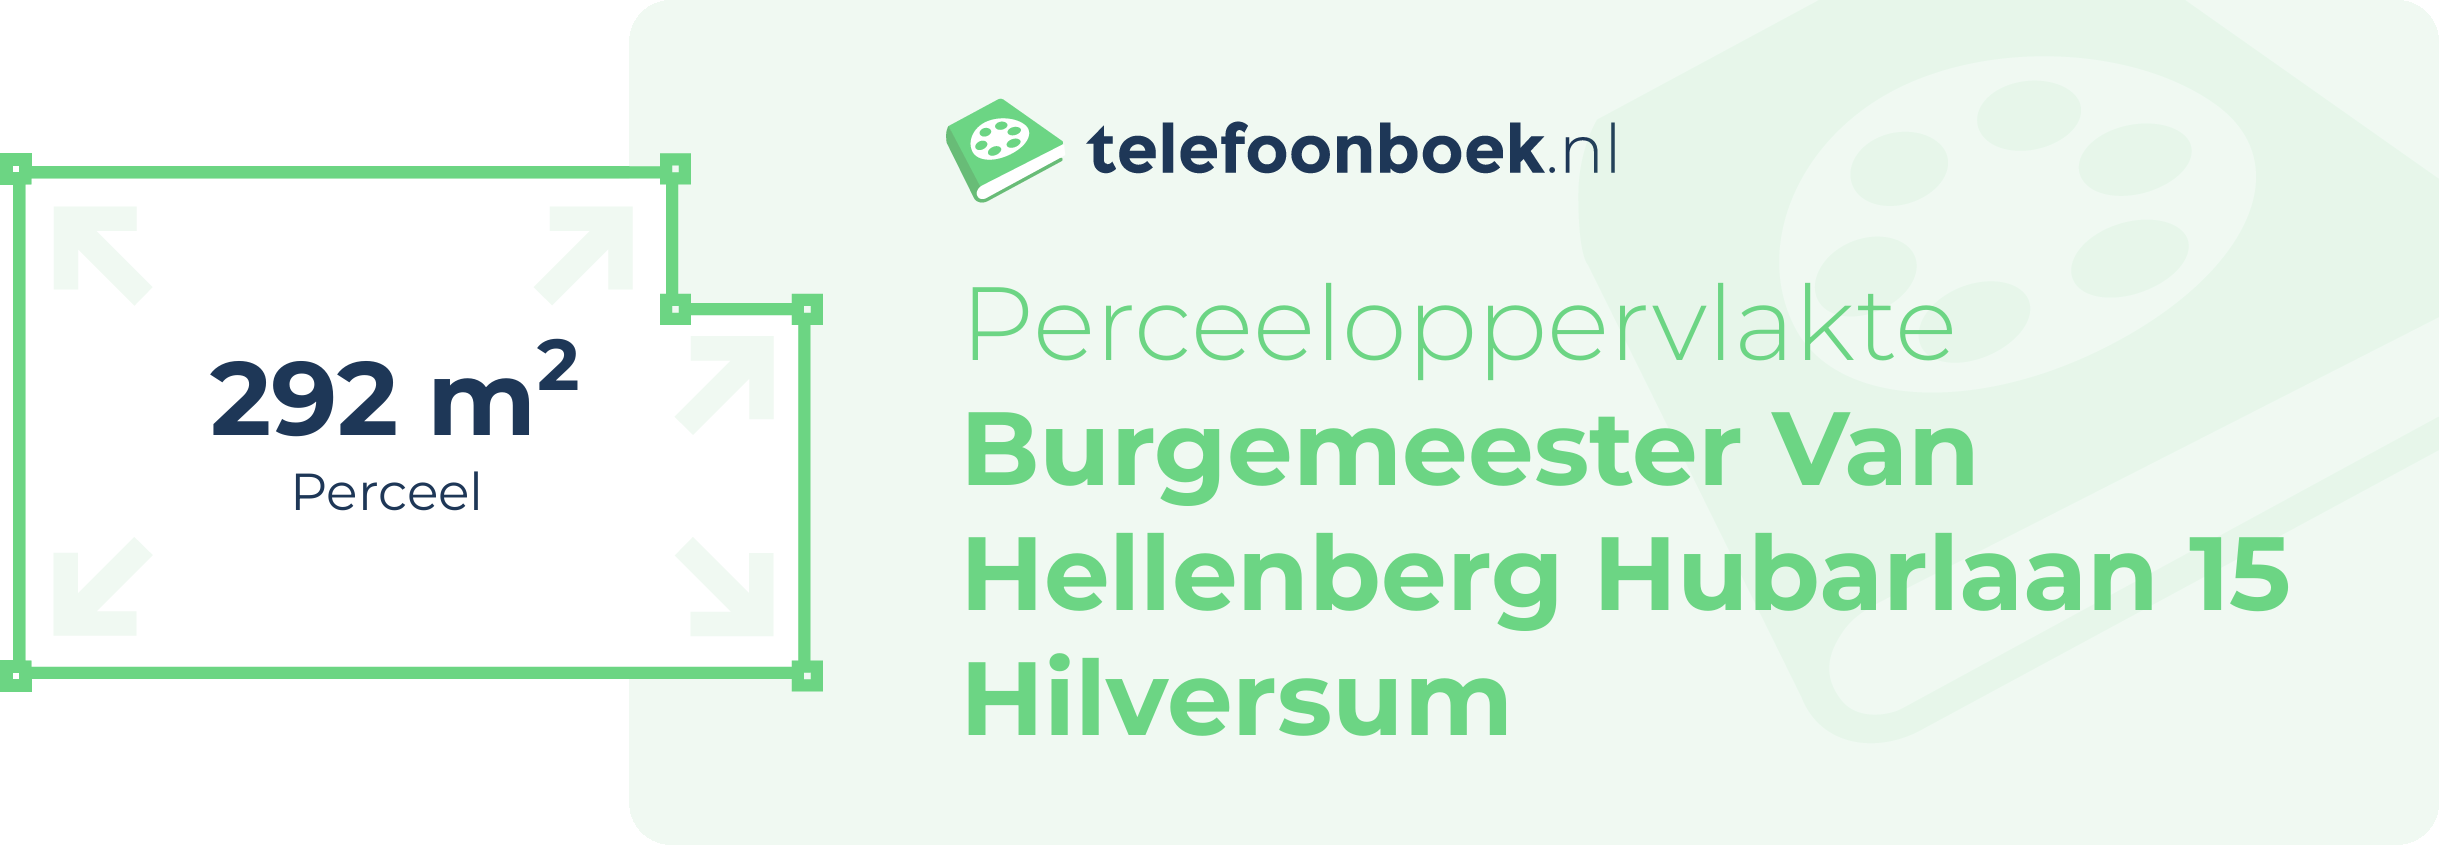 Perceeloppervlakte Burgemeester Van Hellenberg Hubarlaan 15 Hilversum